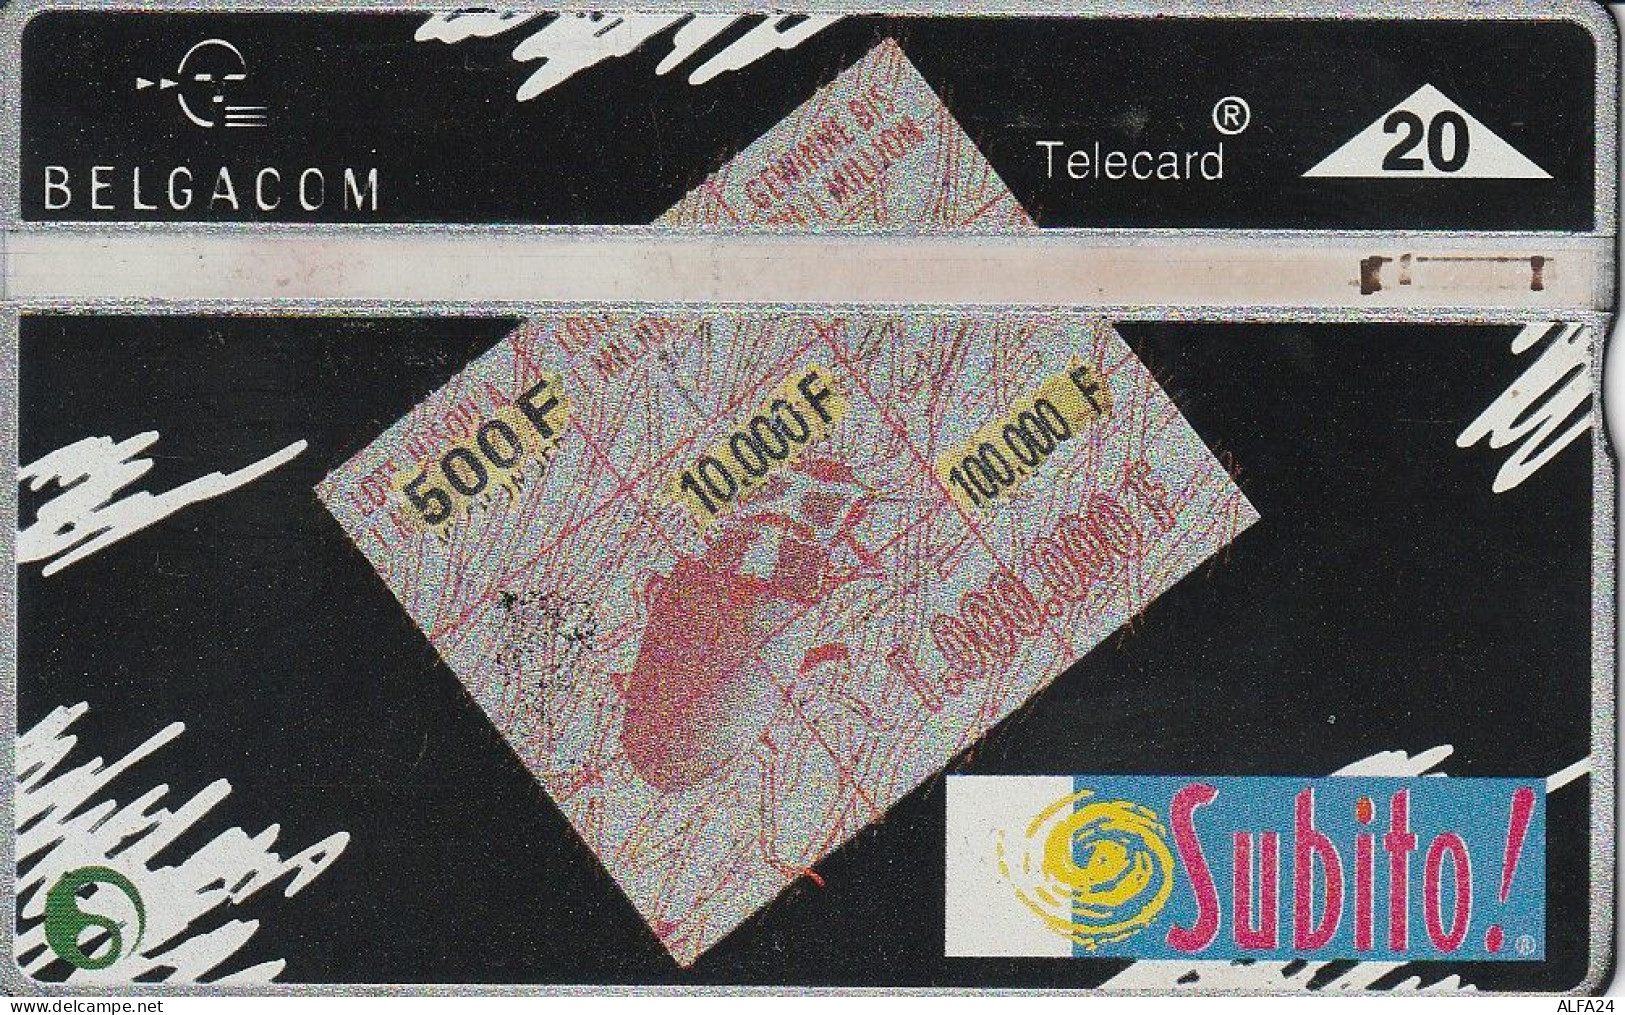 PHONE CARD BELGIO LG (CV6654 - Senza Chip